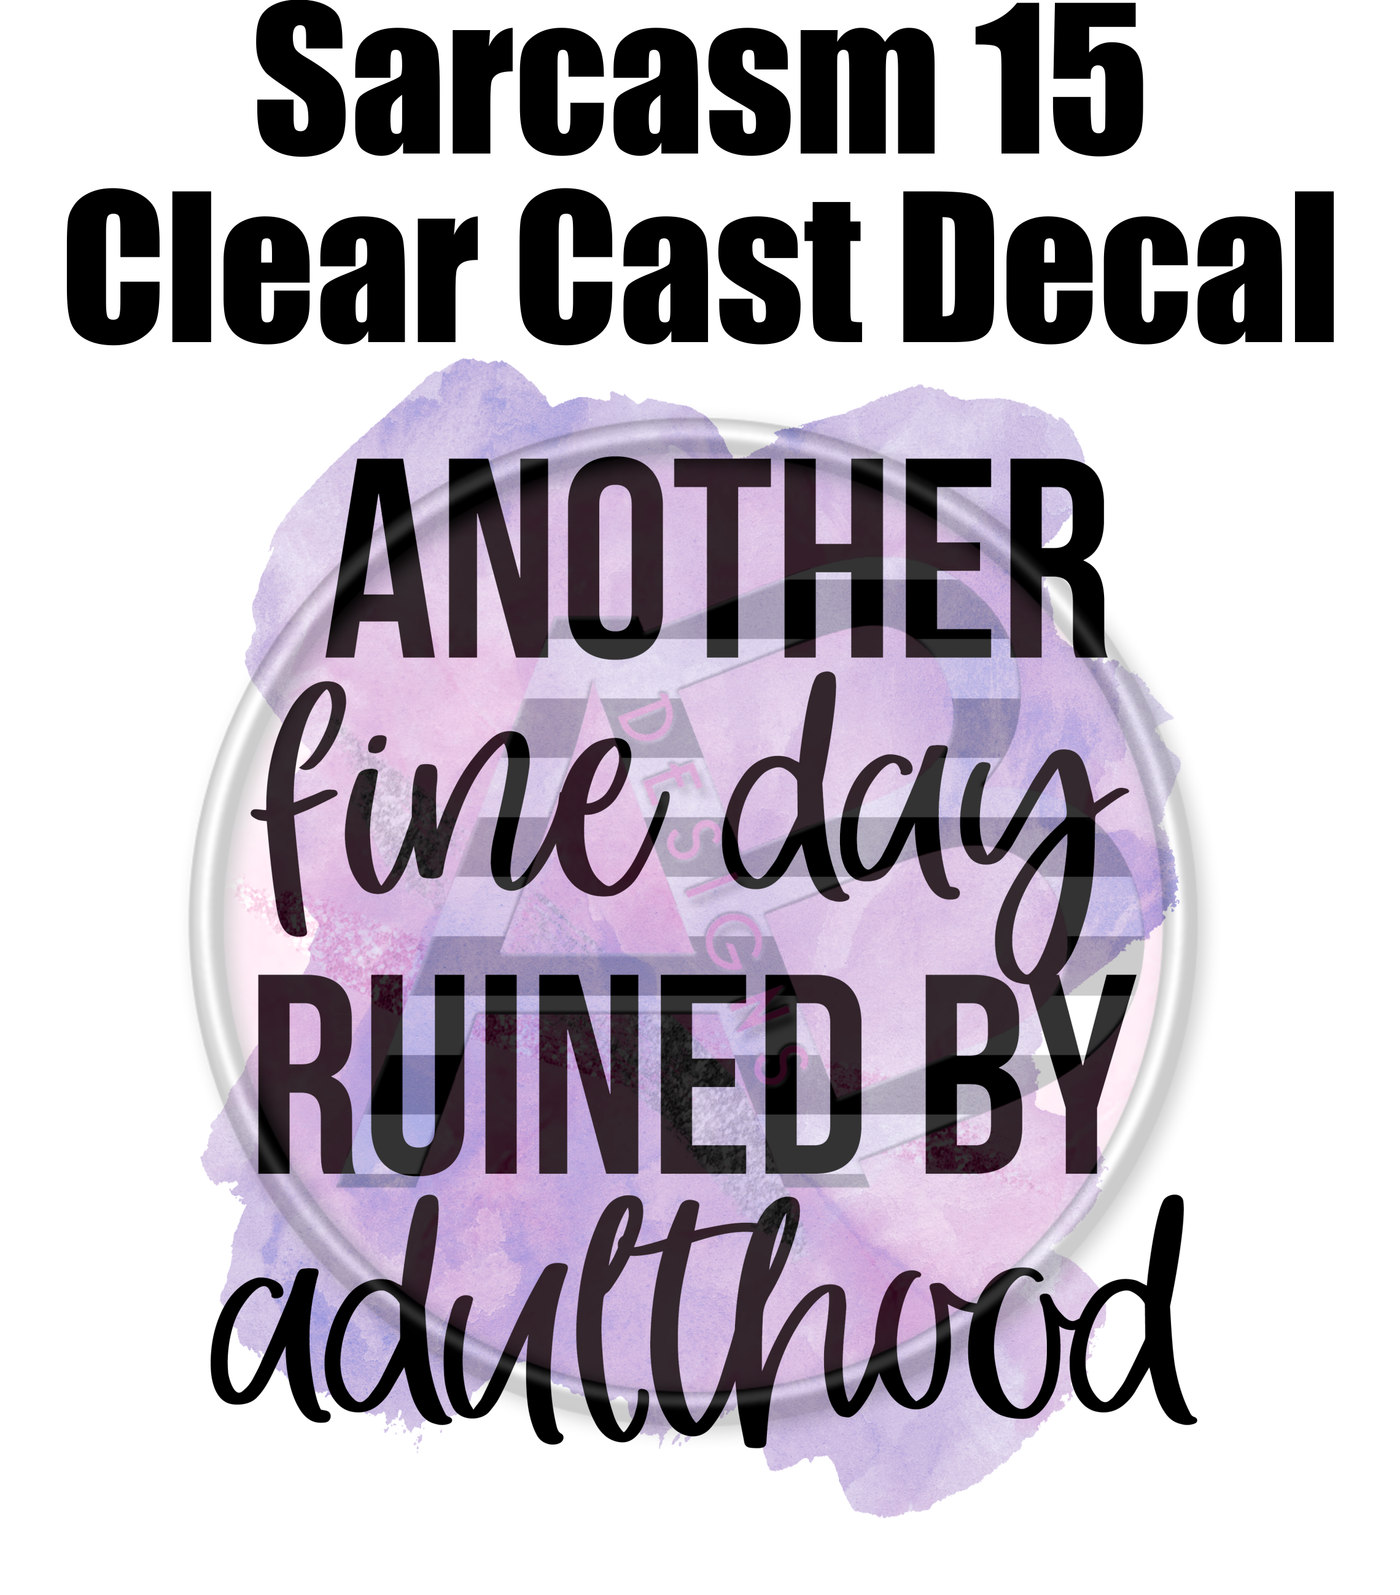 Sarcasm 15 - Clear Cast Decal